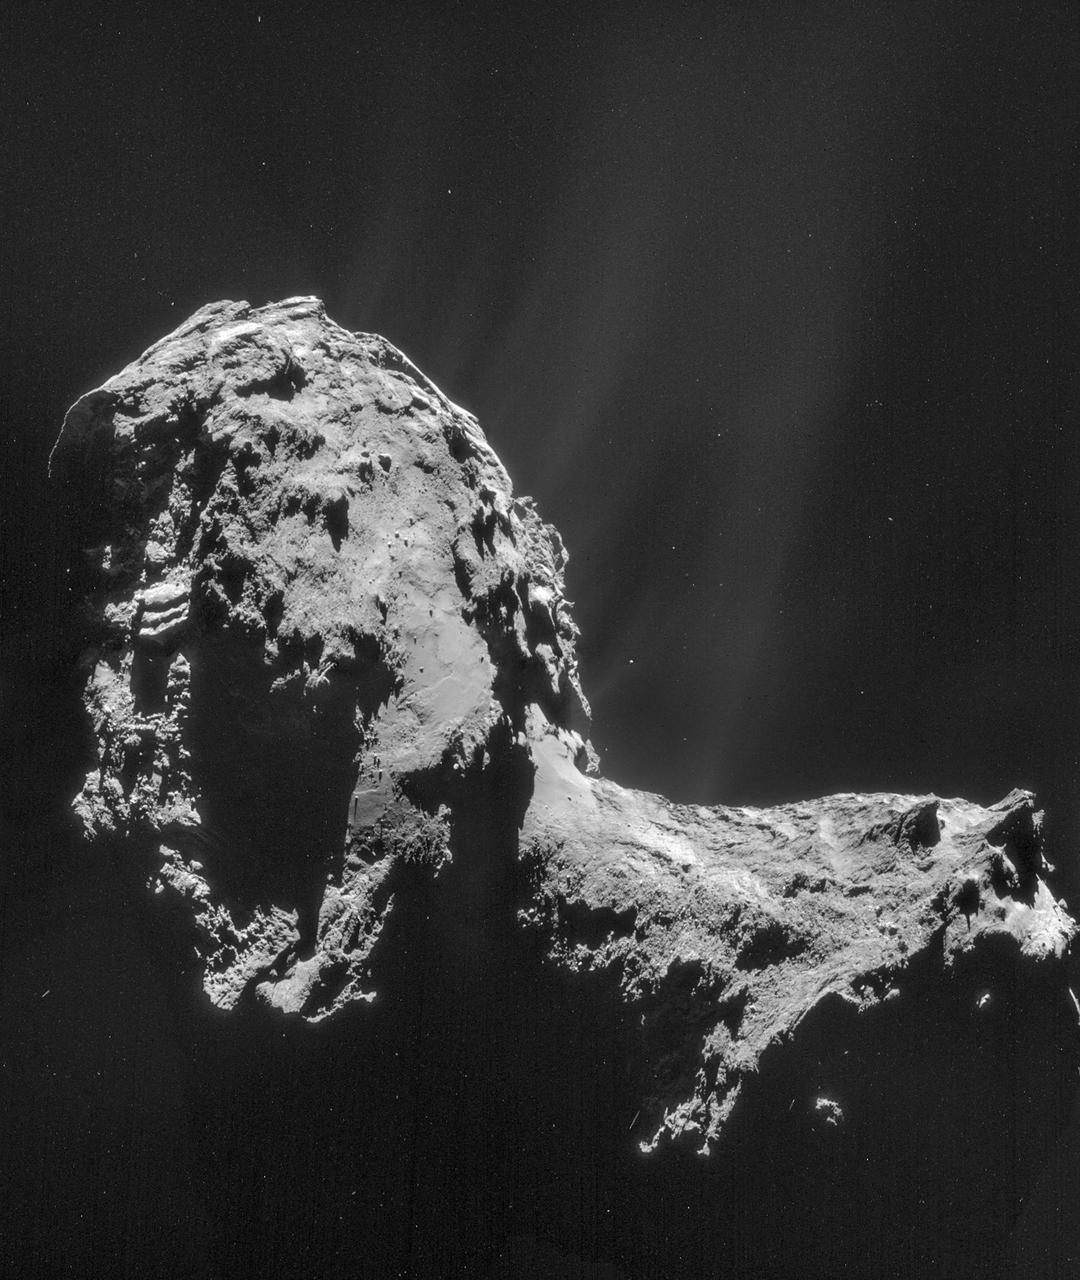 Rosetta Studies A Comet